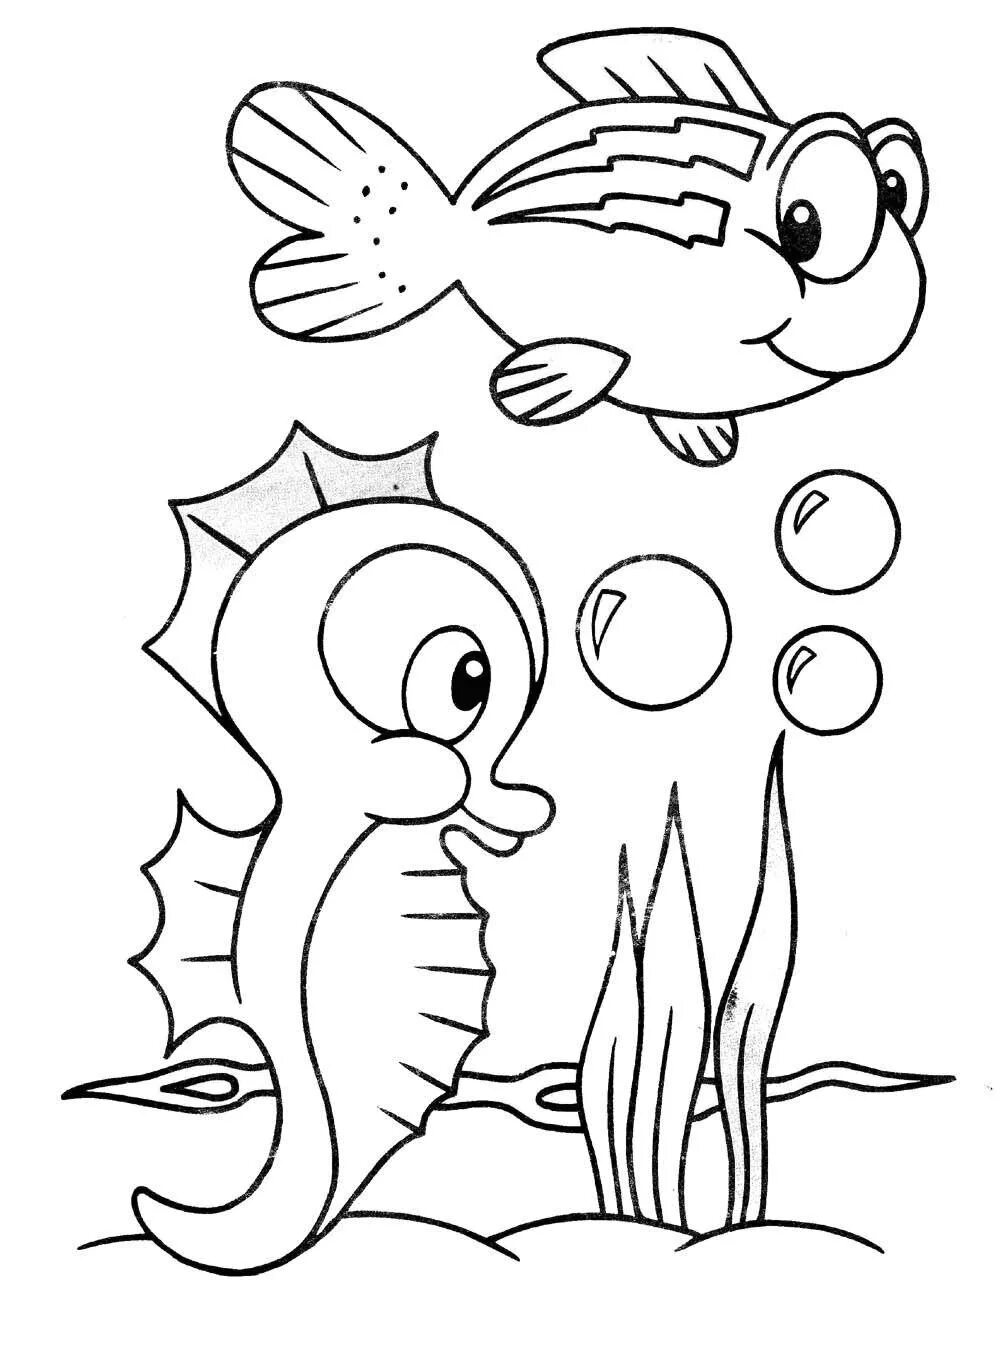 Раскраски рыбки для детей 3 4. Раскраска рыбка. Морские обитатели раскраска для детей. Рыбка раскраска для детей. Морские рыбки раскраска для детей.